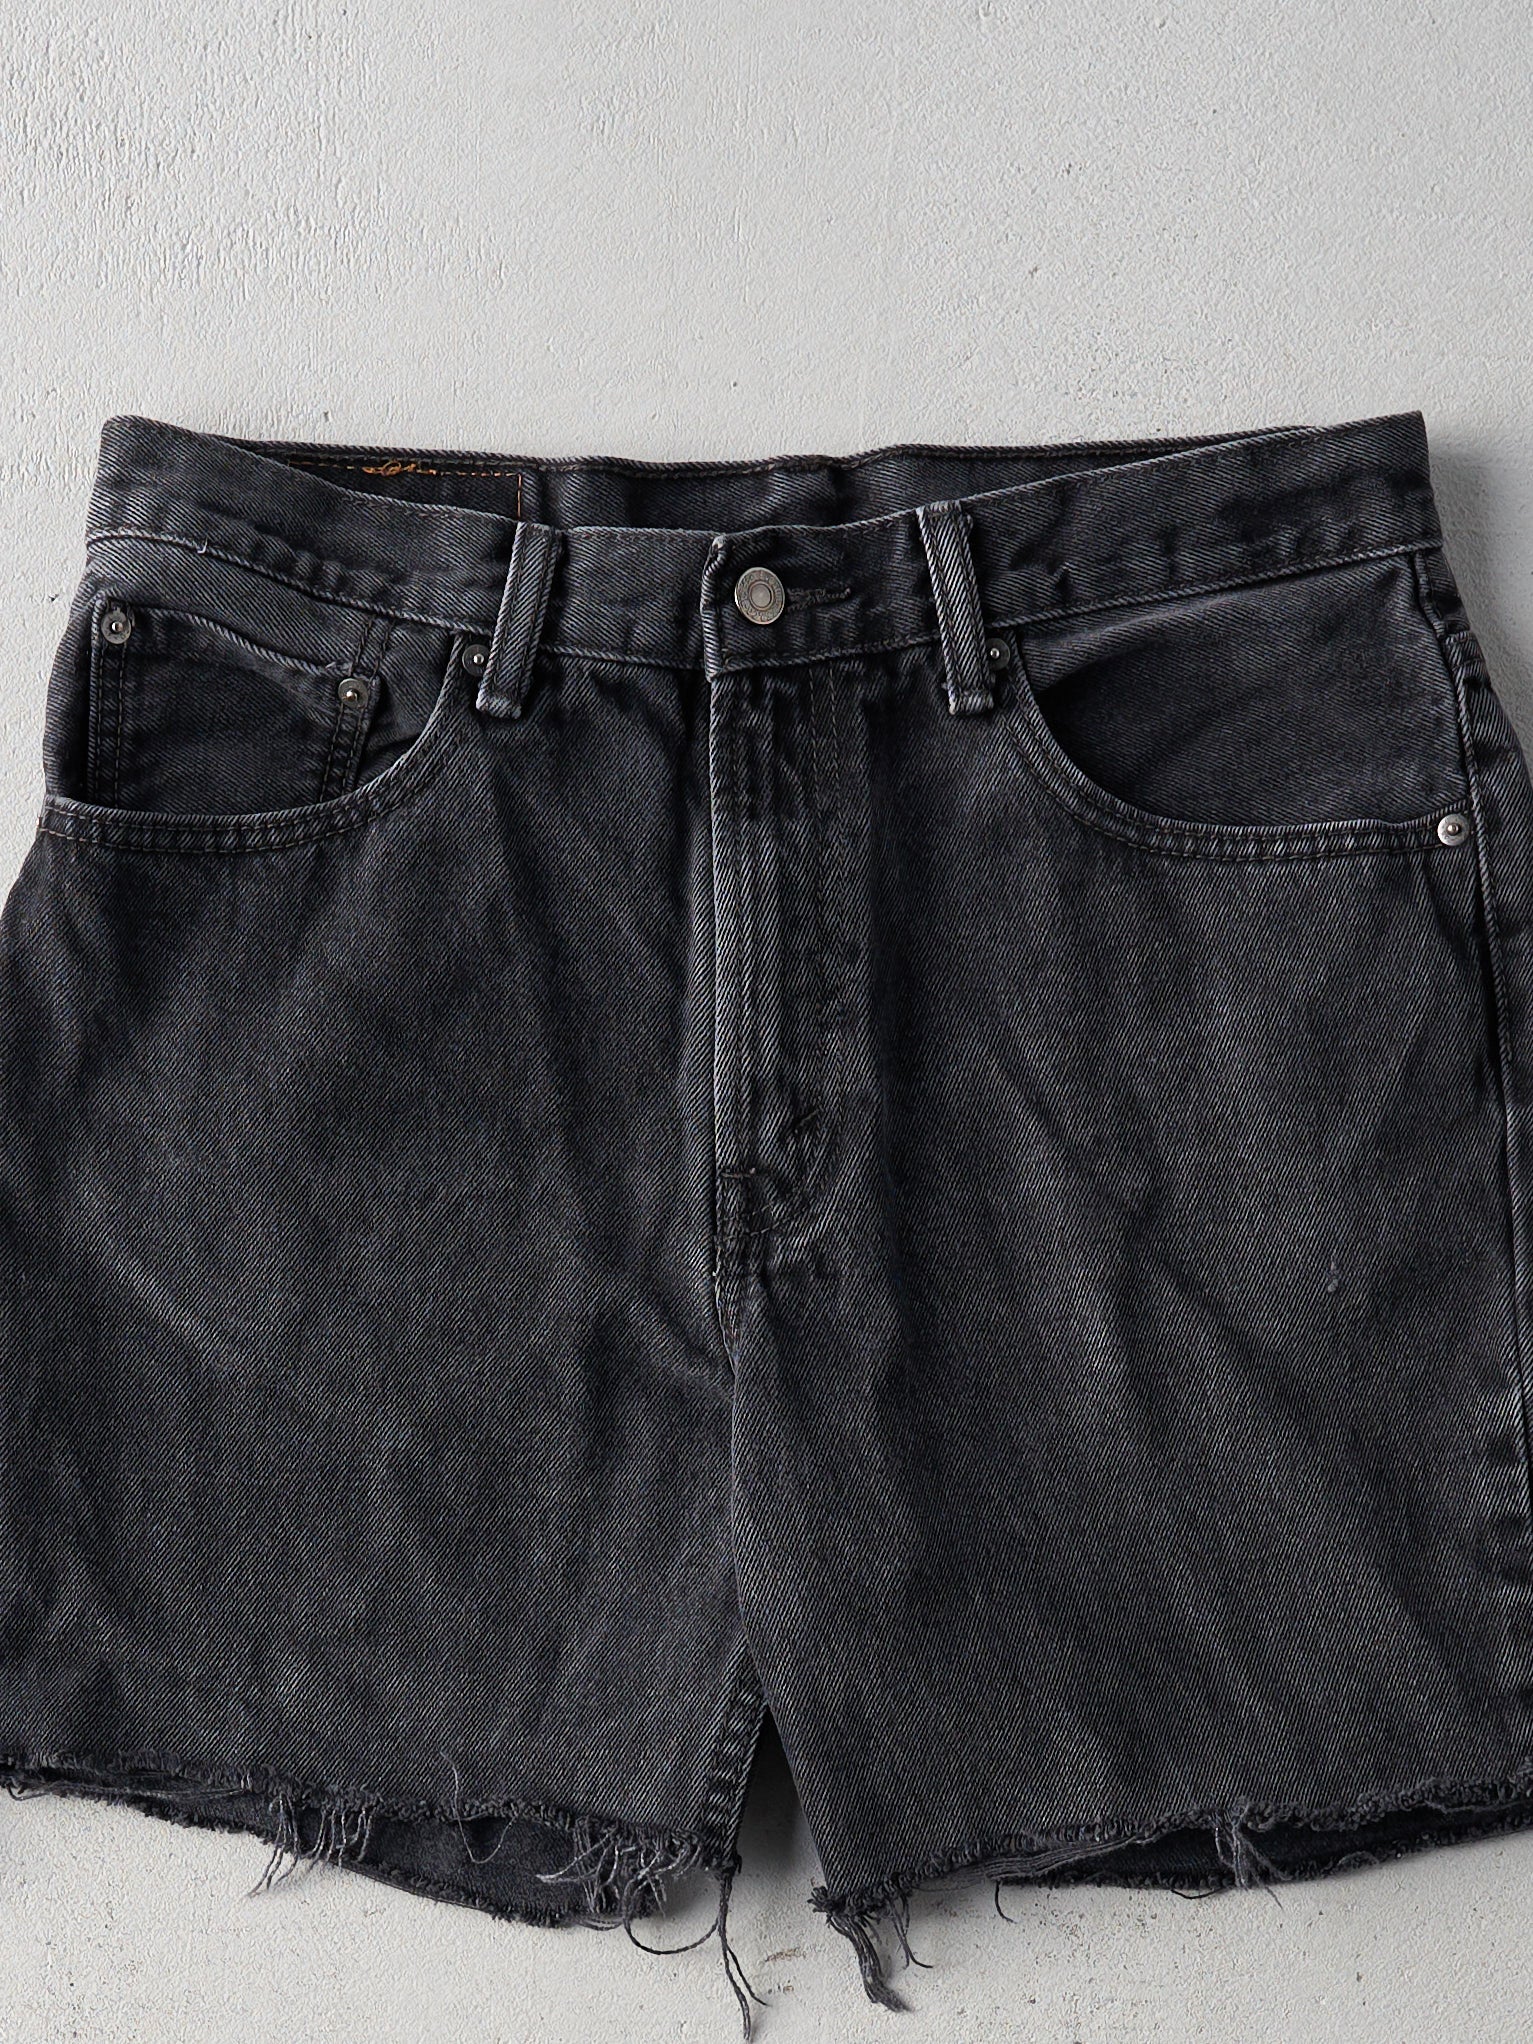 Vintage Black Levi 516 Cut Off Shorts (32x5)